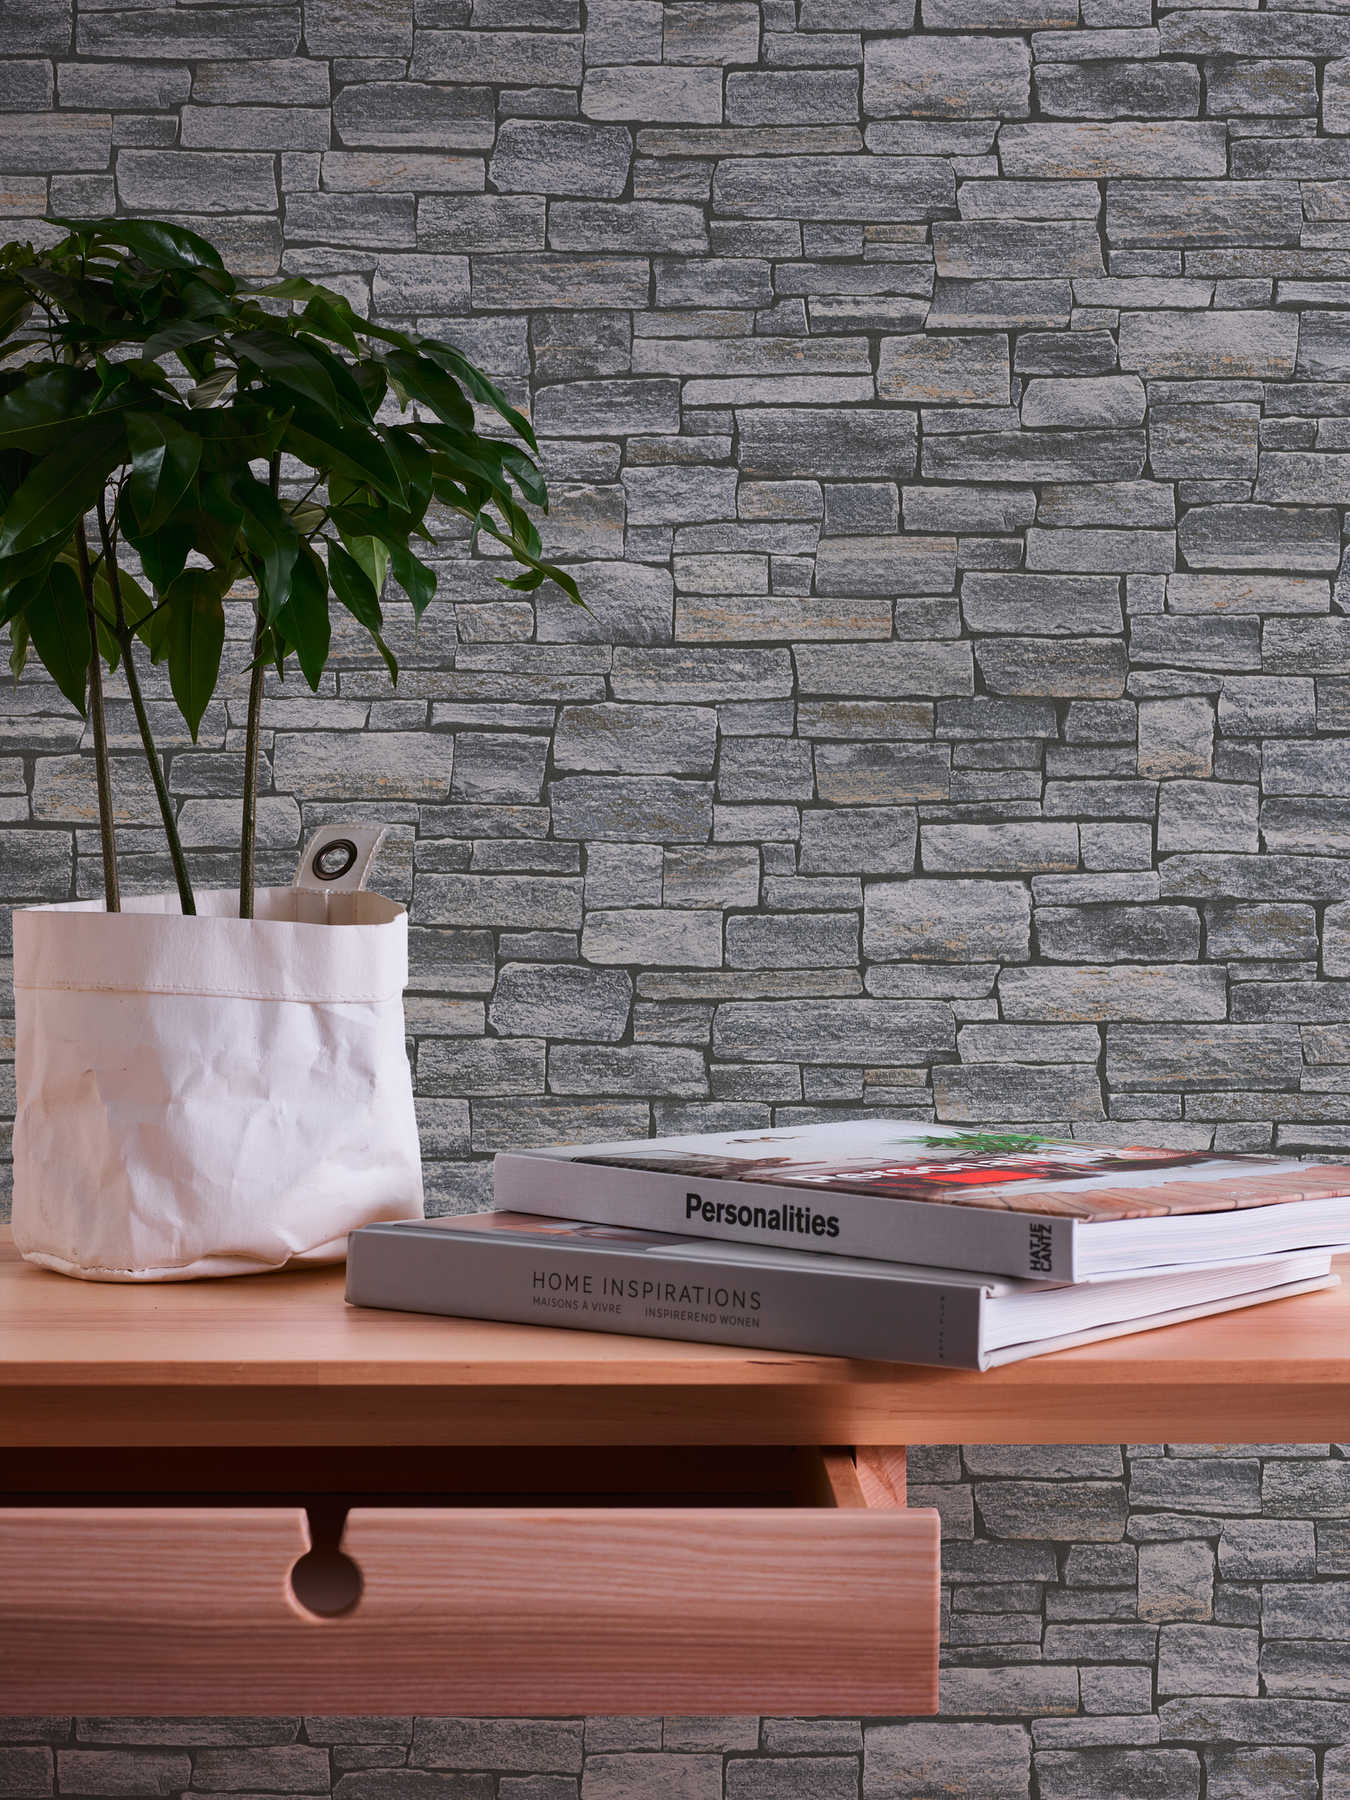             Wallpaper with stone look & natural wall motif - grey, black, brown
        